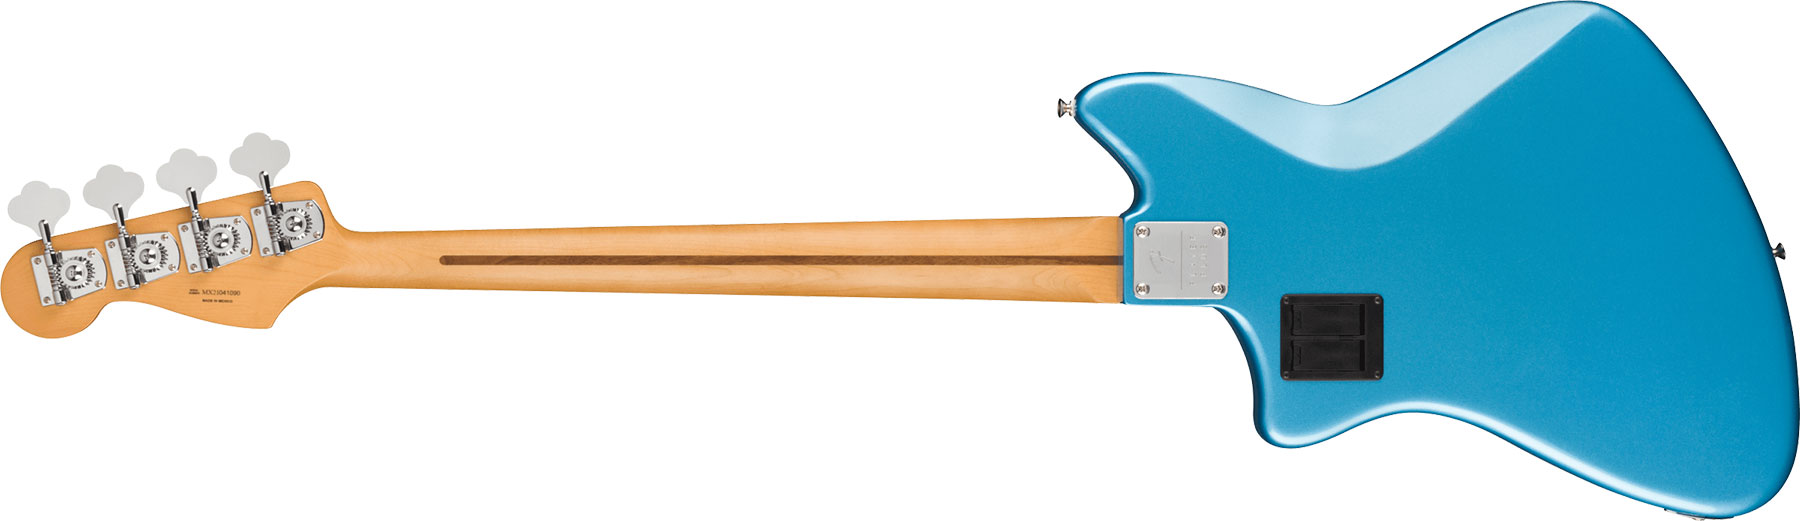 Fender Meteora Bass Active Player Plus Mex Pf - Opal Spark - Solid body elektrische bas - Variation 1